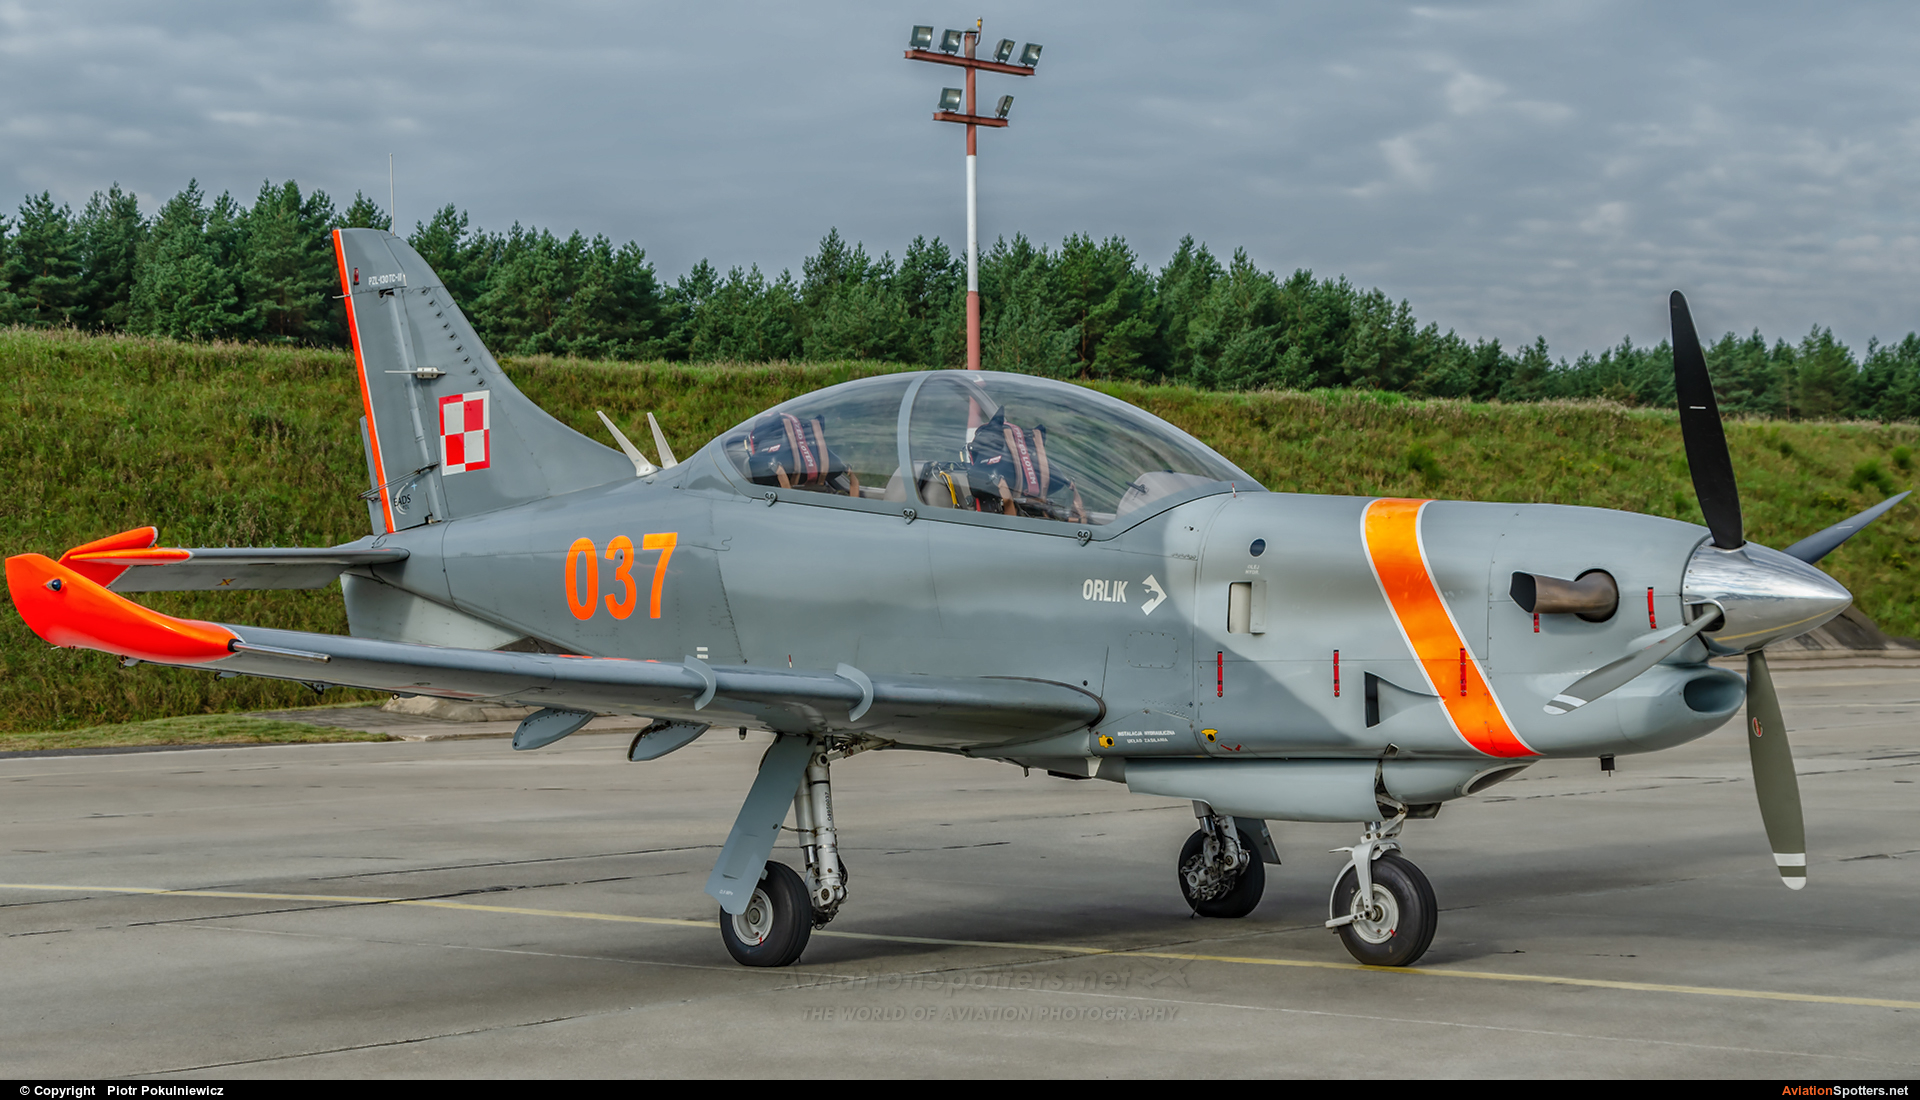 Poland - Air Force : Orlik Acrobatic Group  -  PZL-130 Orlik TC-1 - 2  (037) By Piotr Pokulniewicz (Piciu)